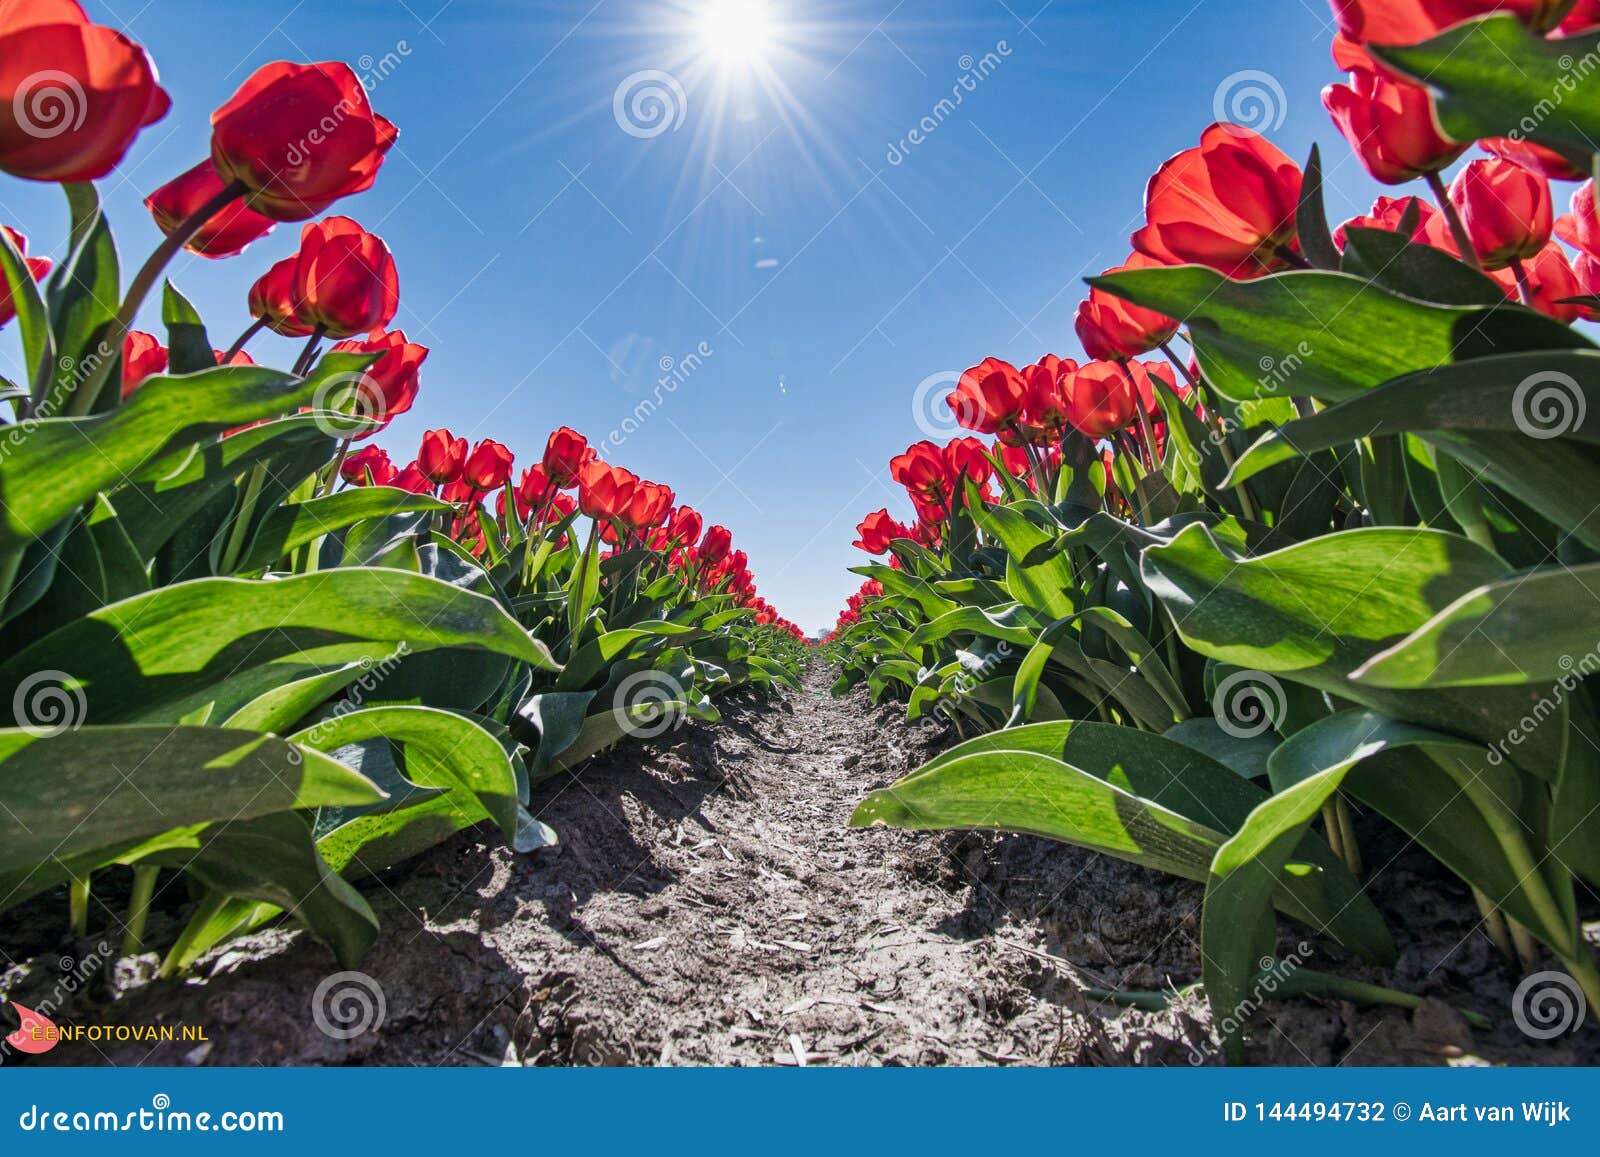 dutch tulips - tulpen velden in west-friesland